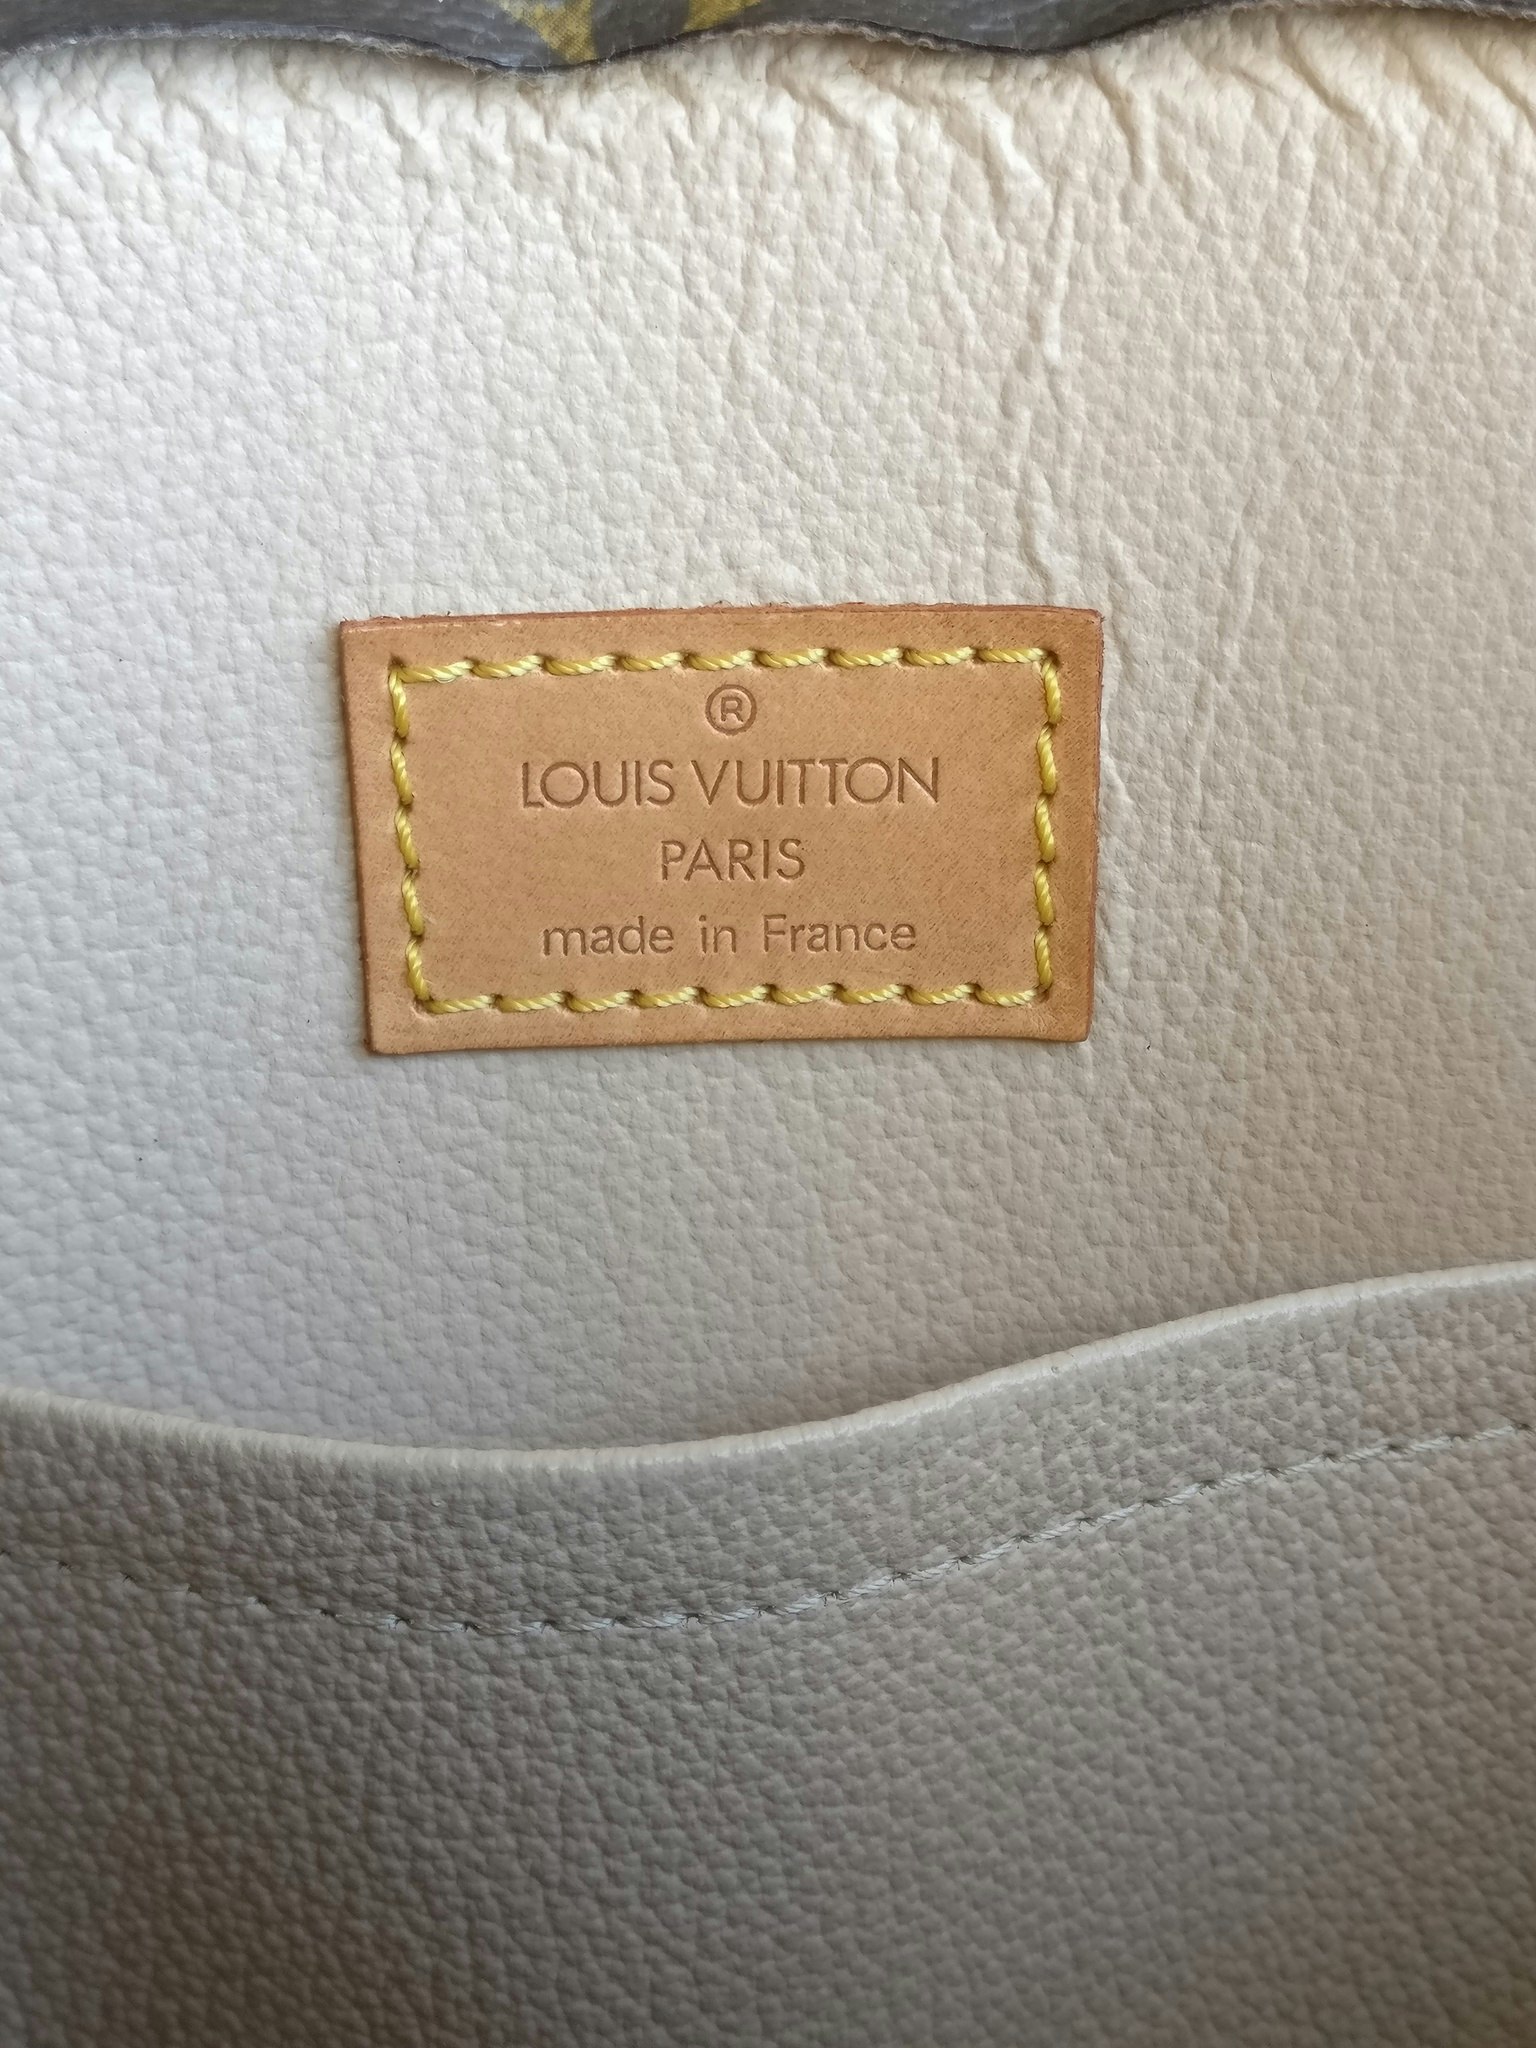 Louis Vuitton Sac Plat Tote 389605